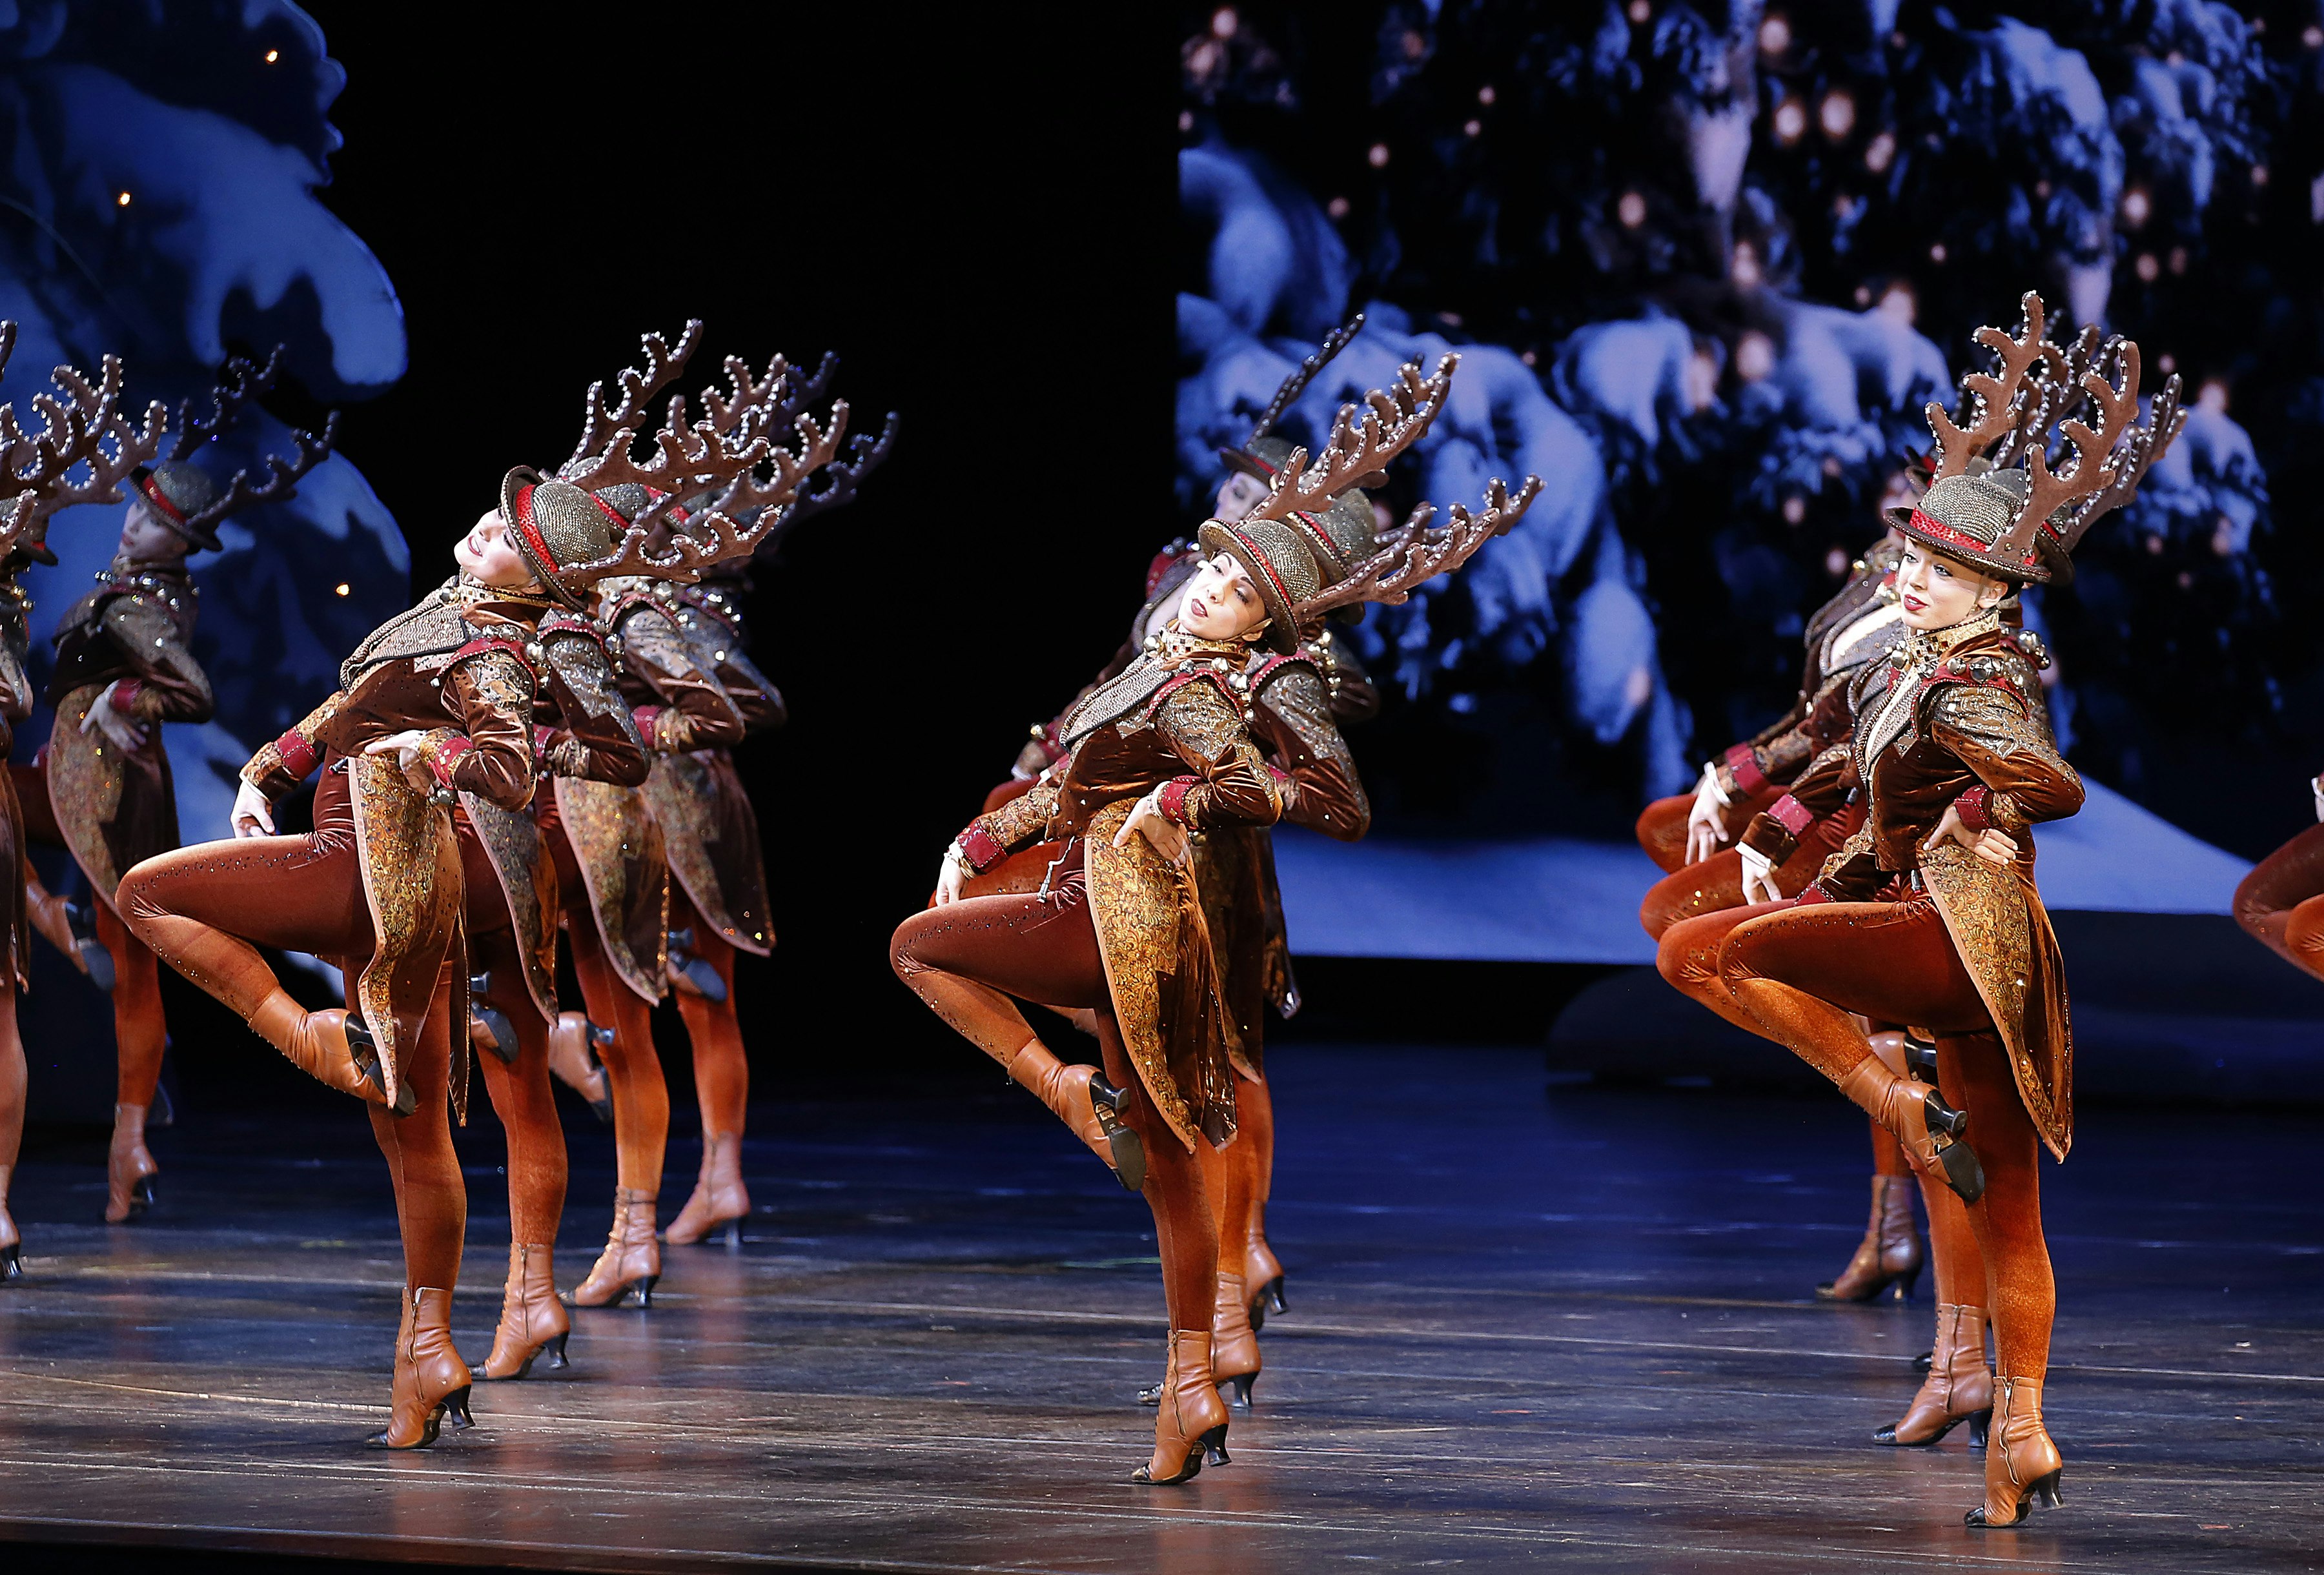 Rockettes dressed as reindeer perform at Radio City Music Hall